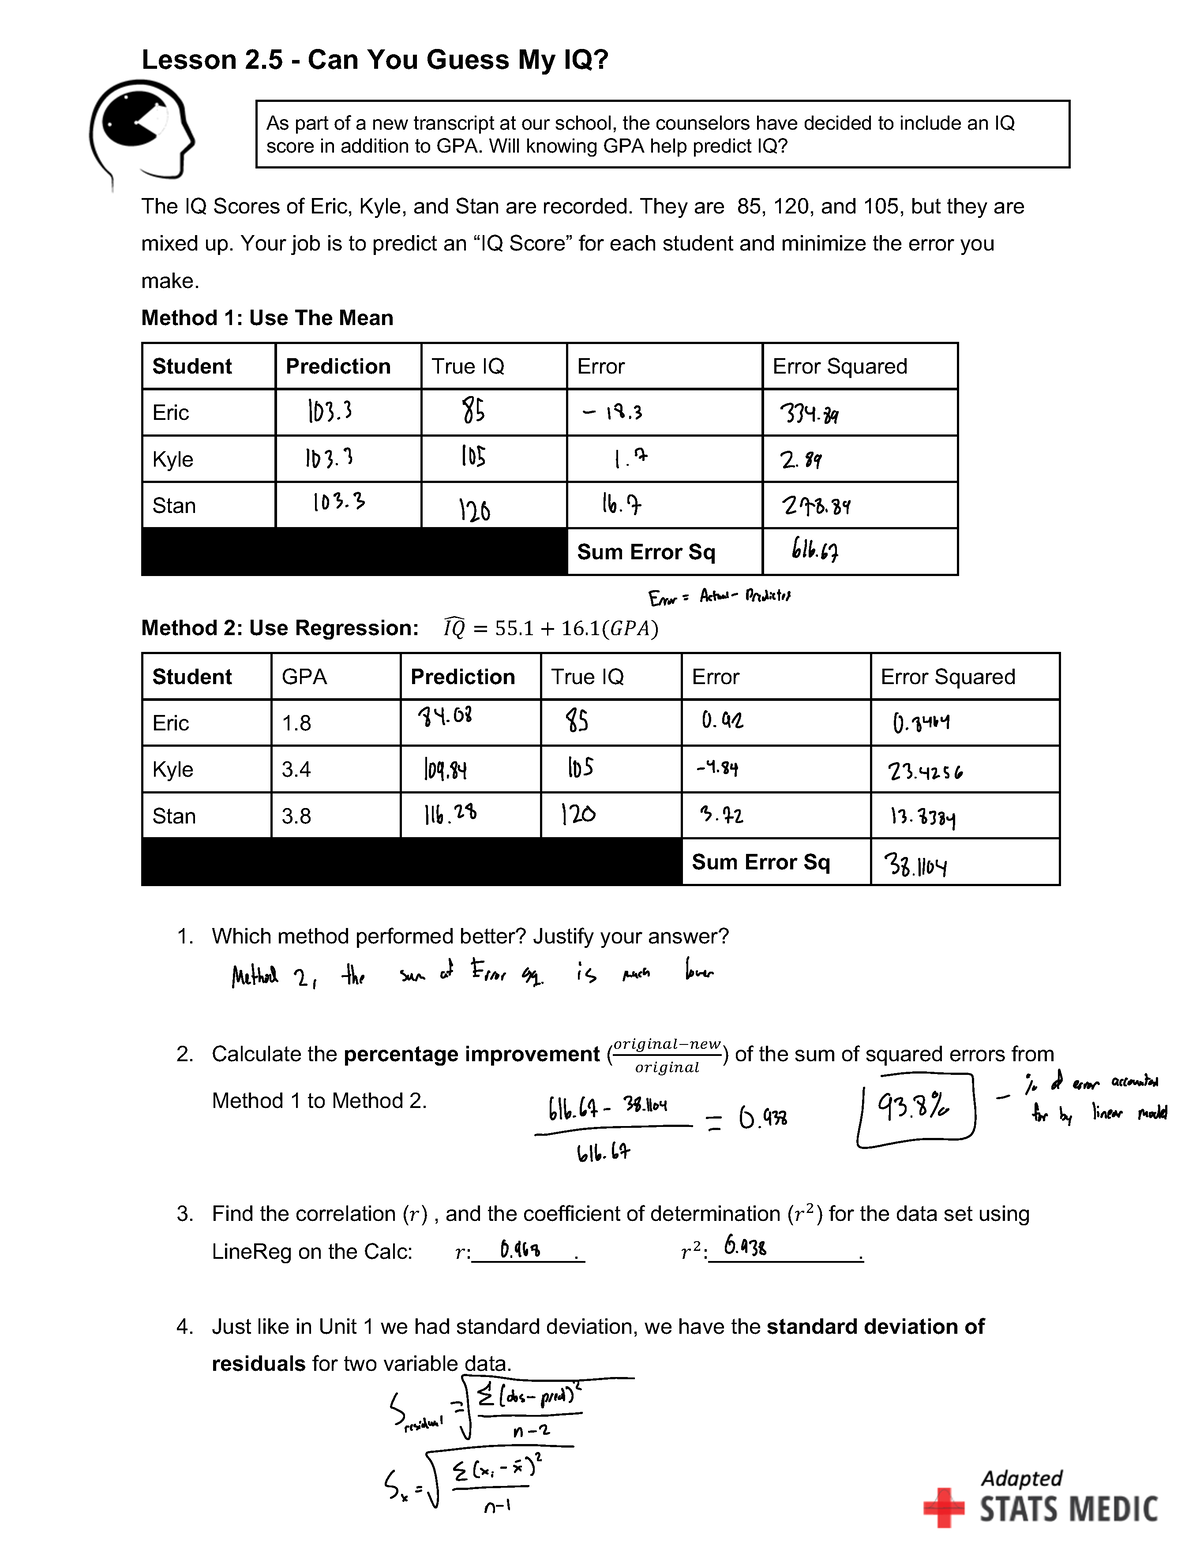 UTS quiz 2 Cheat Sheet by cjdvslee (2 pages) #education #philosophy #asdasd  #asd #asda : r/Cheatography